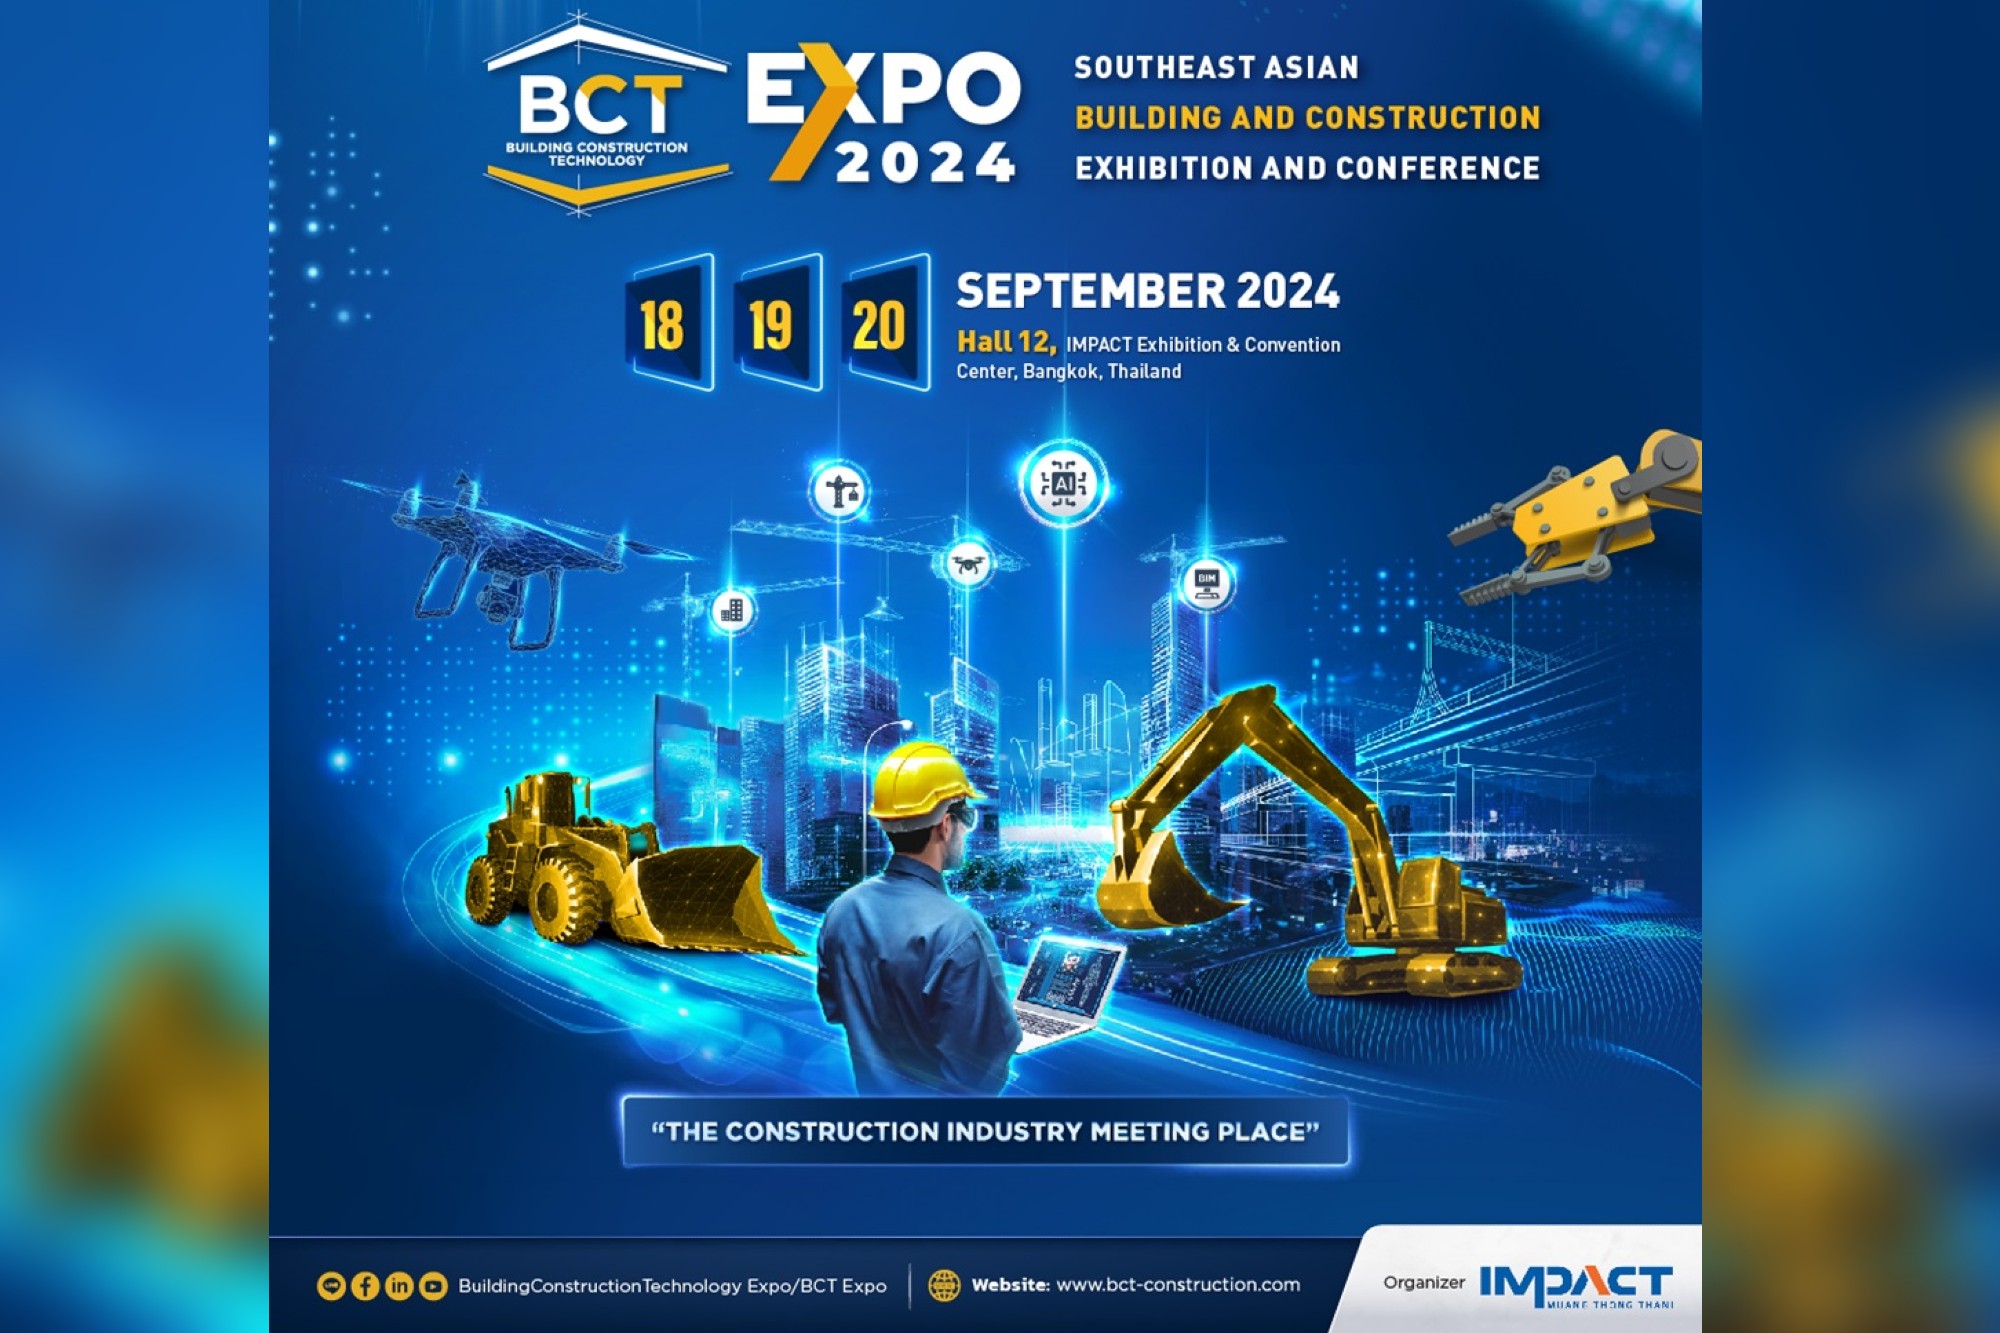 BCT Expo 2024